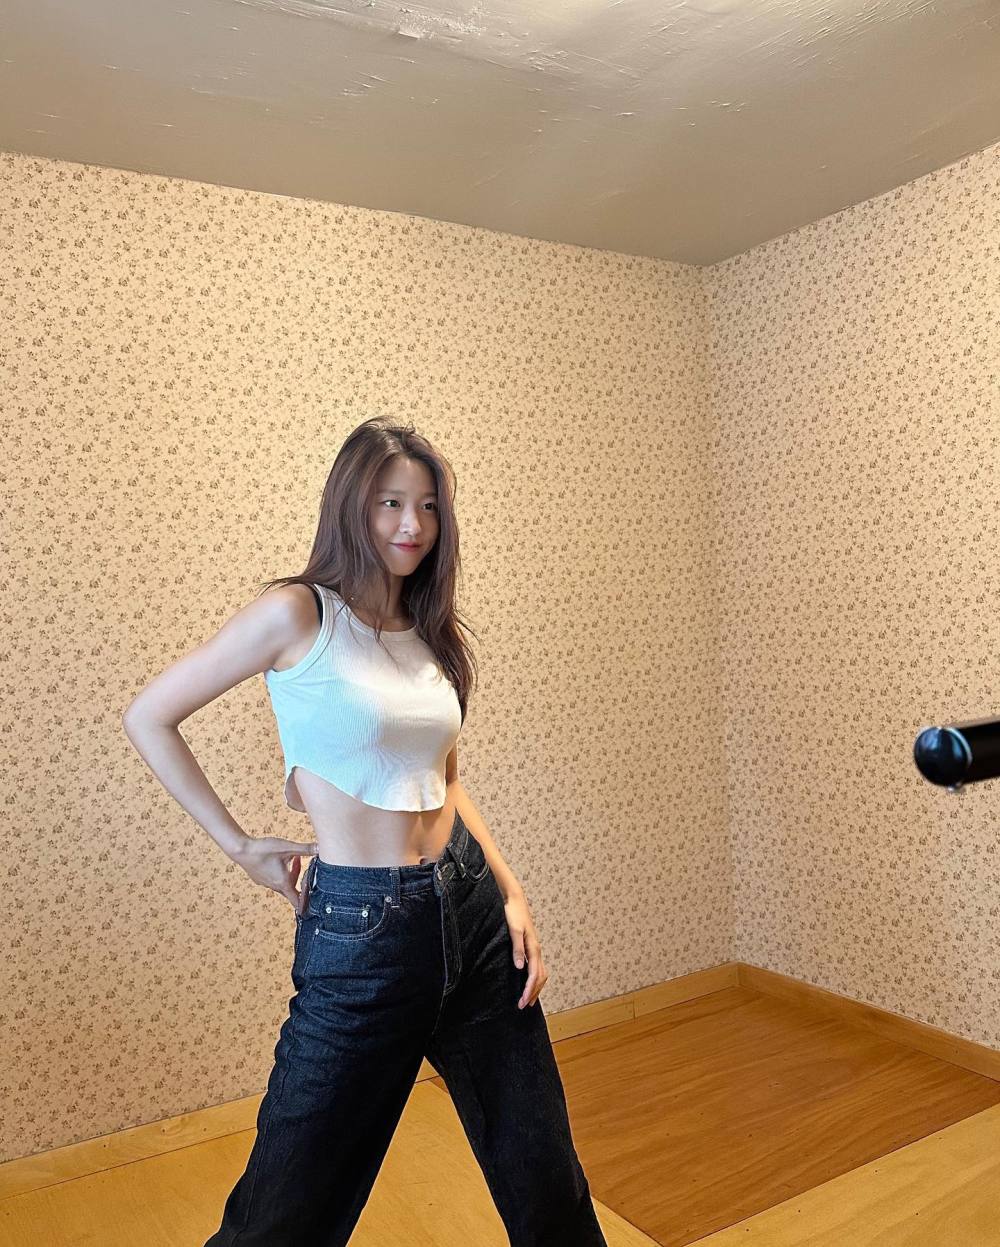 Seol-Hyun Kim Sexy and Hottest Photos , Latest Pics